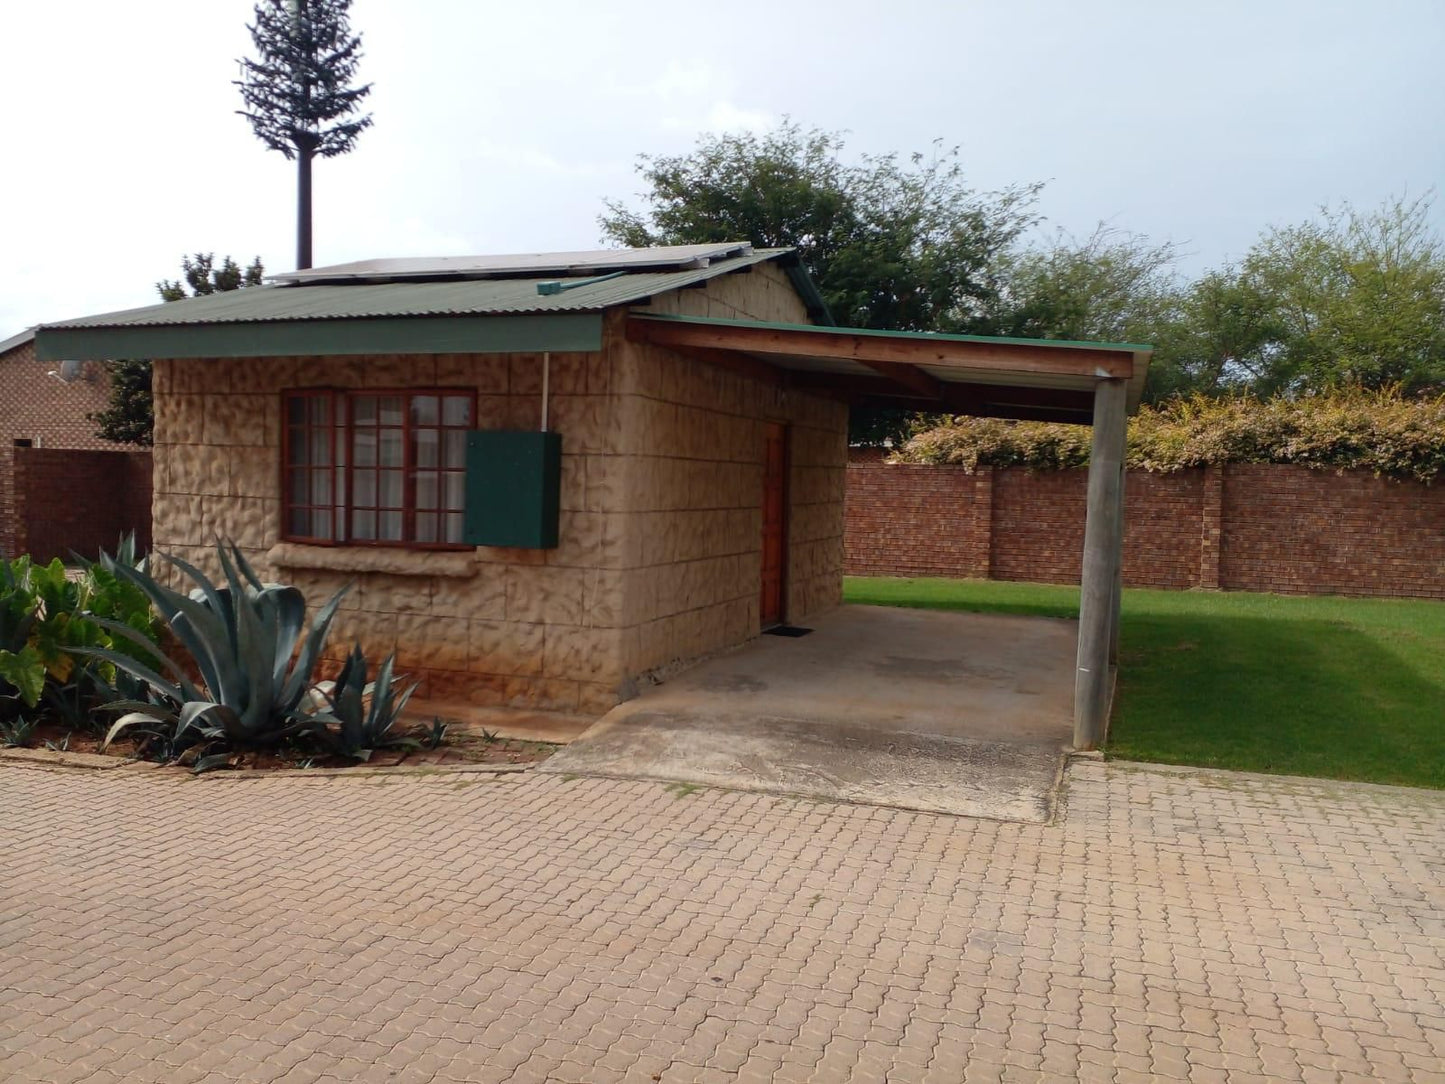 Sundowner Lodge And Caravan Park Piet Retief Mpumalanga South Africa House, Building, Architecture